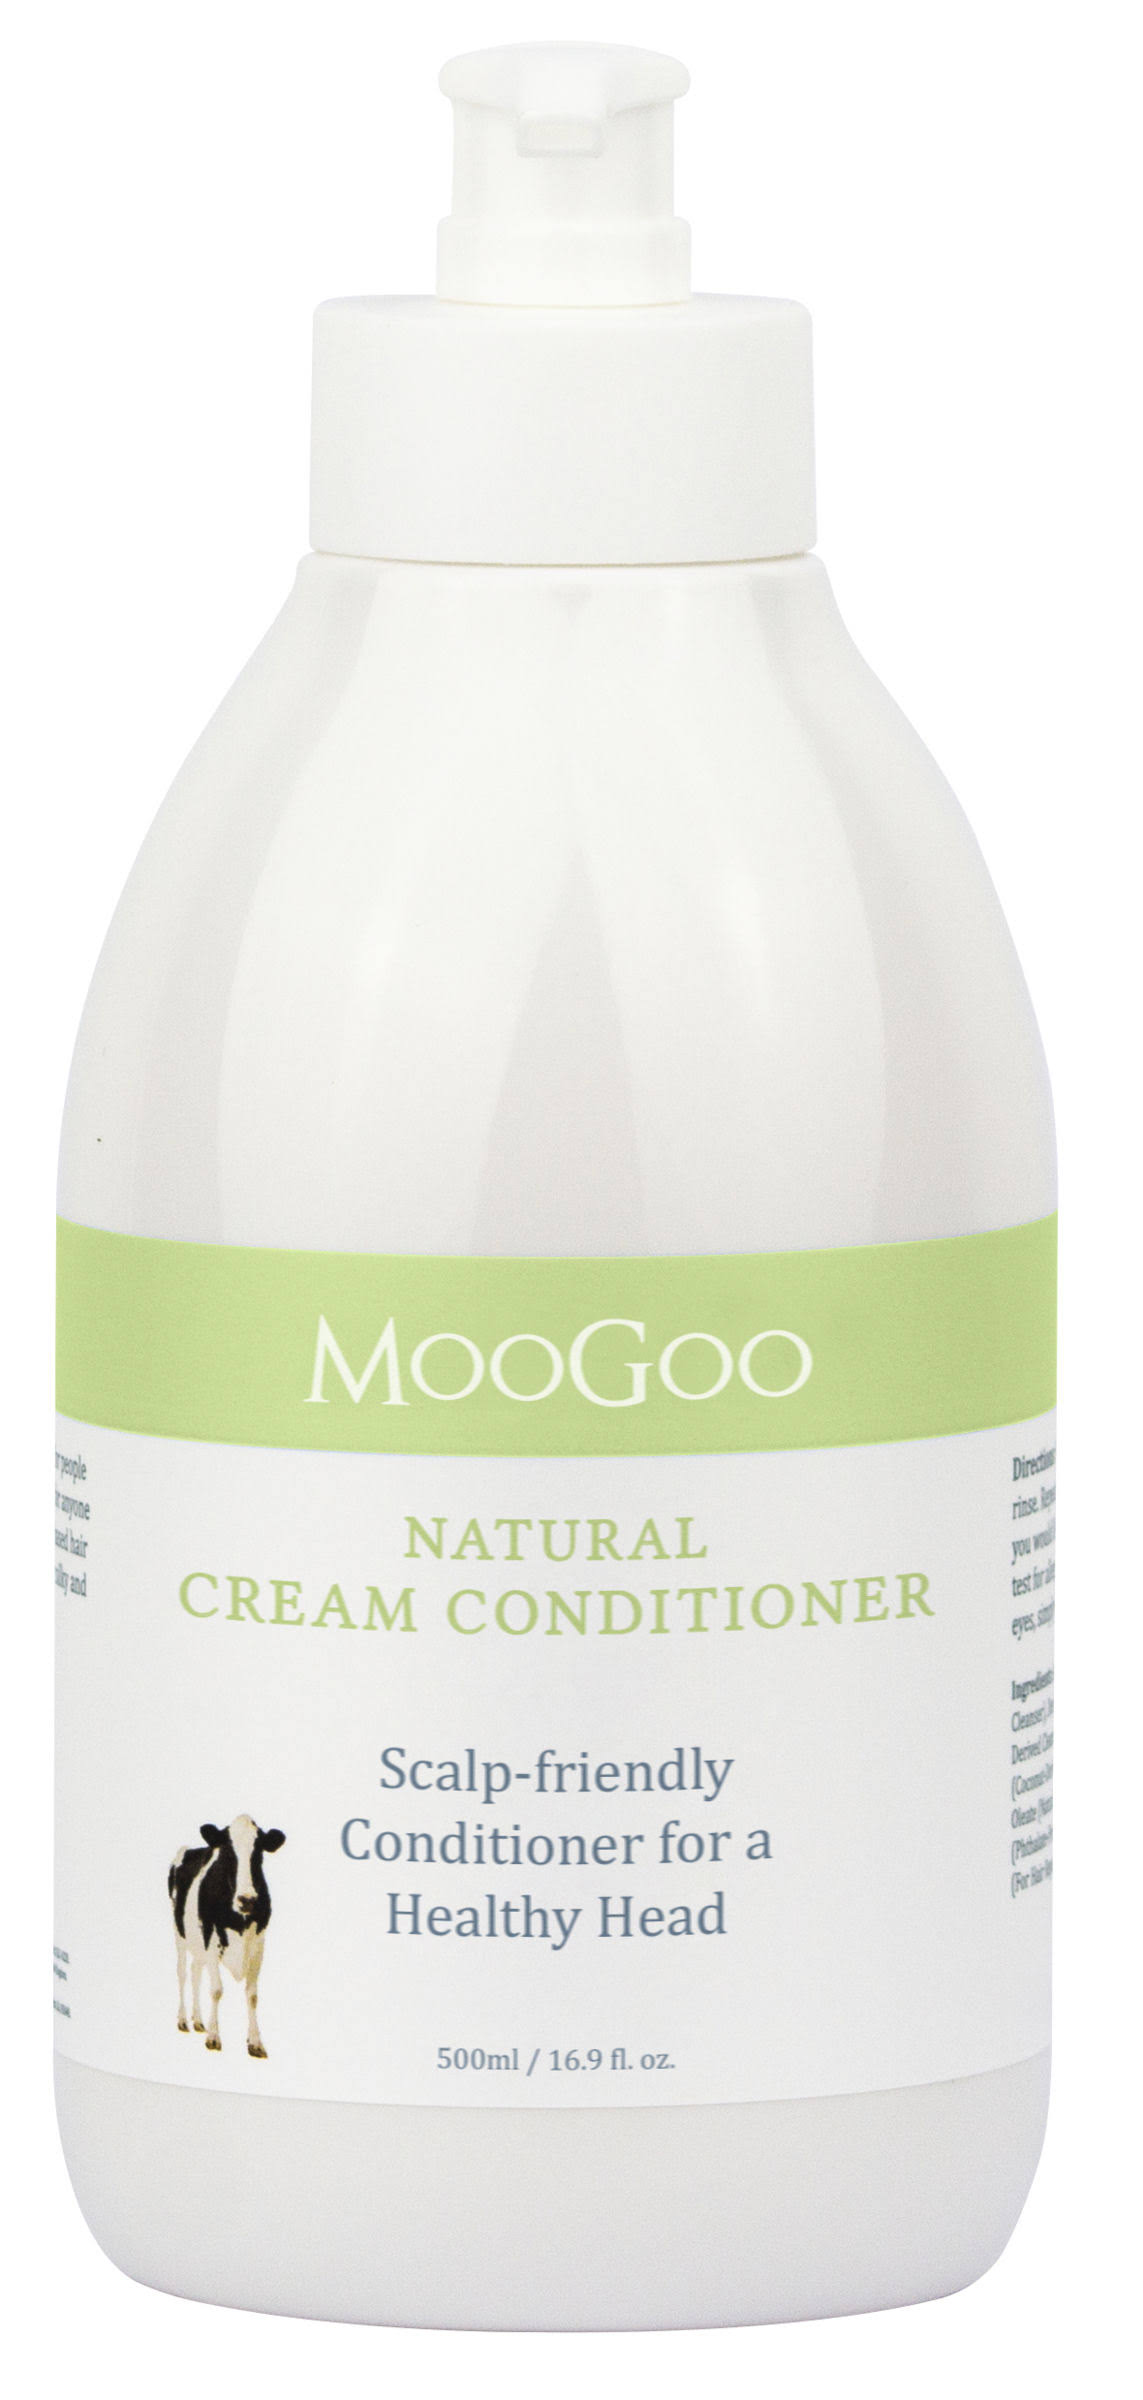 Moogoo Cream Conditioner